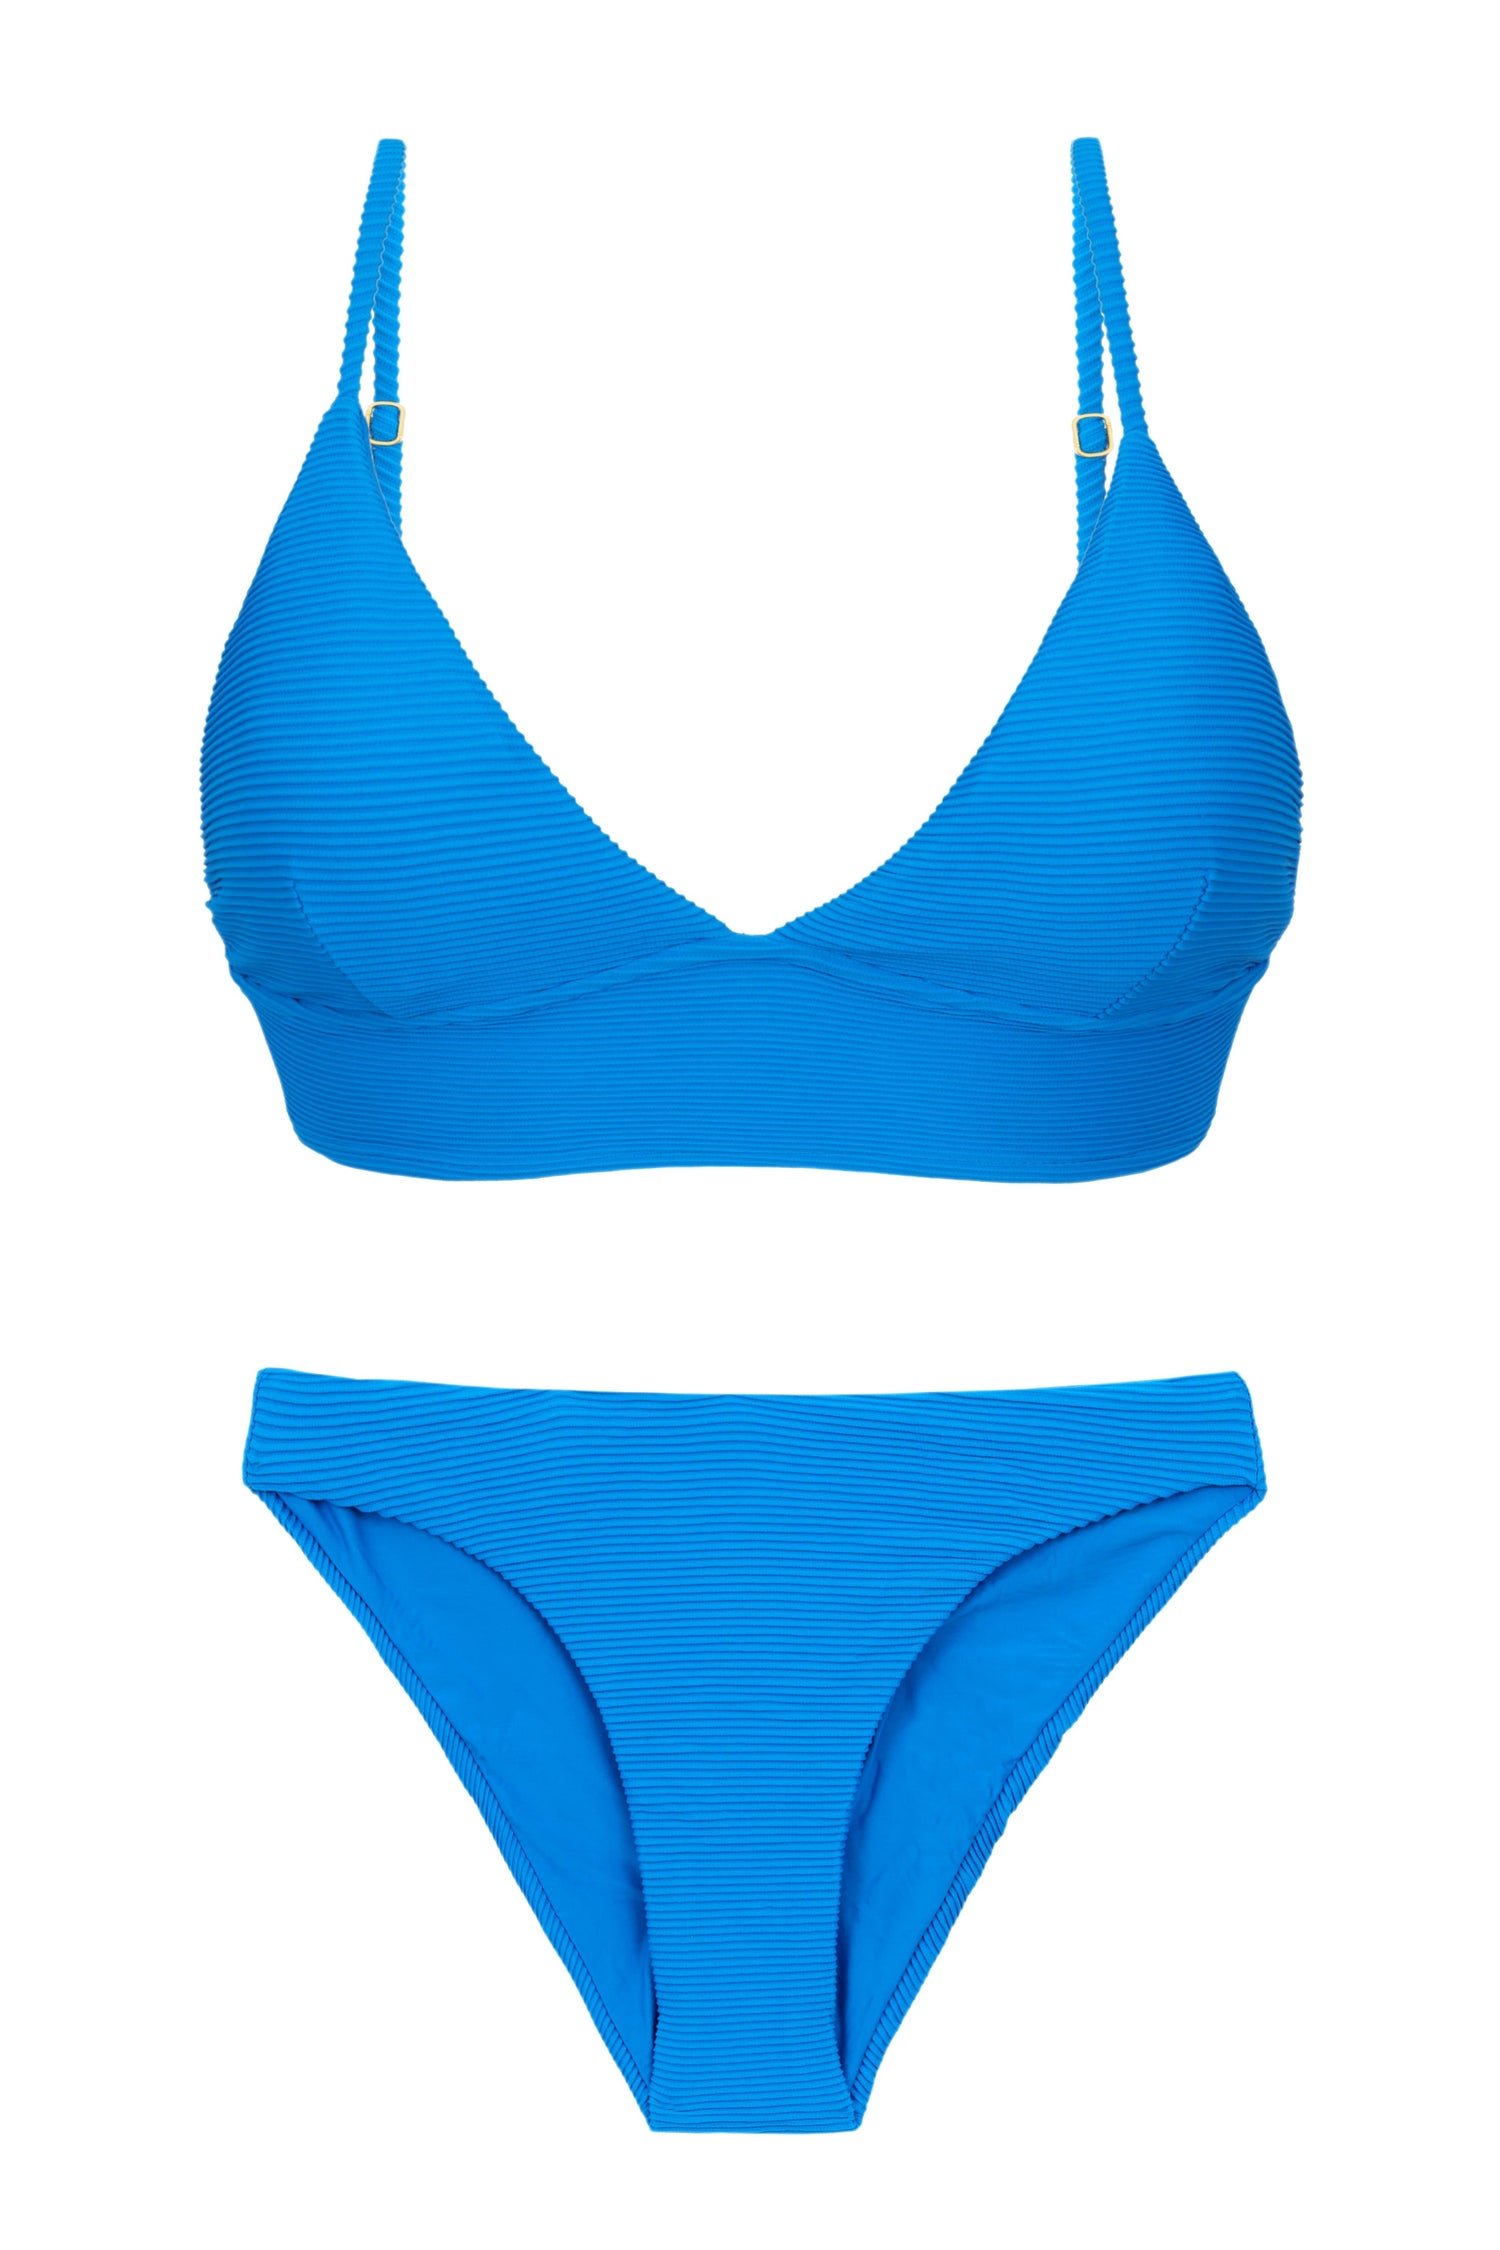 Rio de Sol Blue Textured Tri-Tank Set - Sporty Two-Piece Swimwear